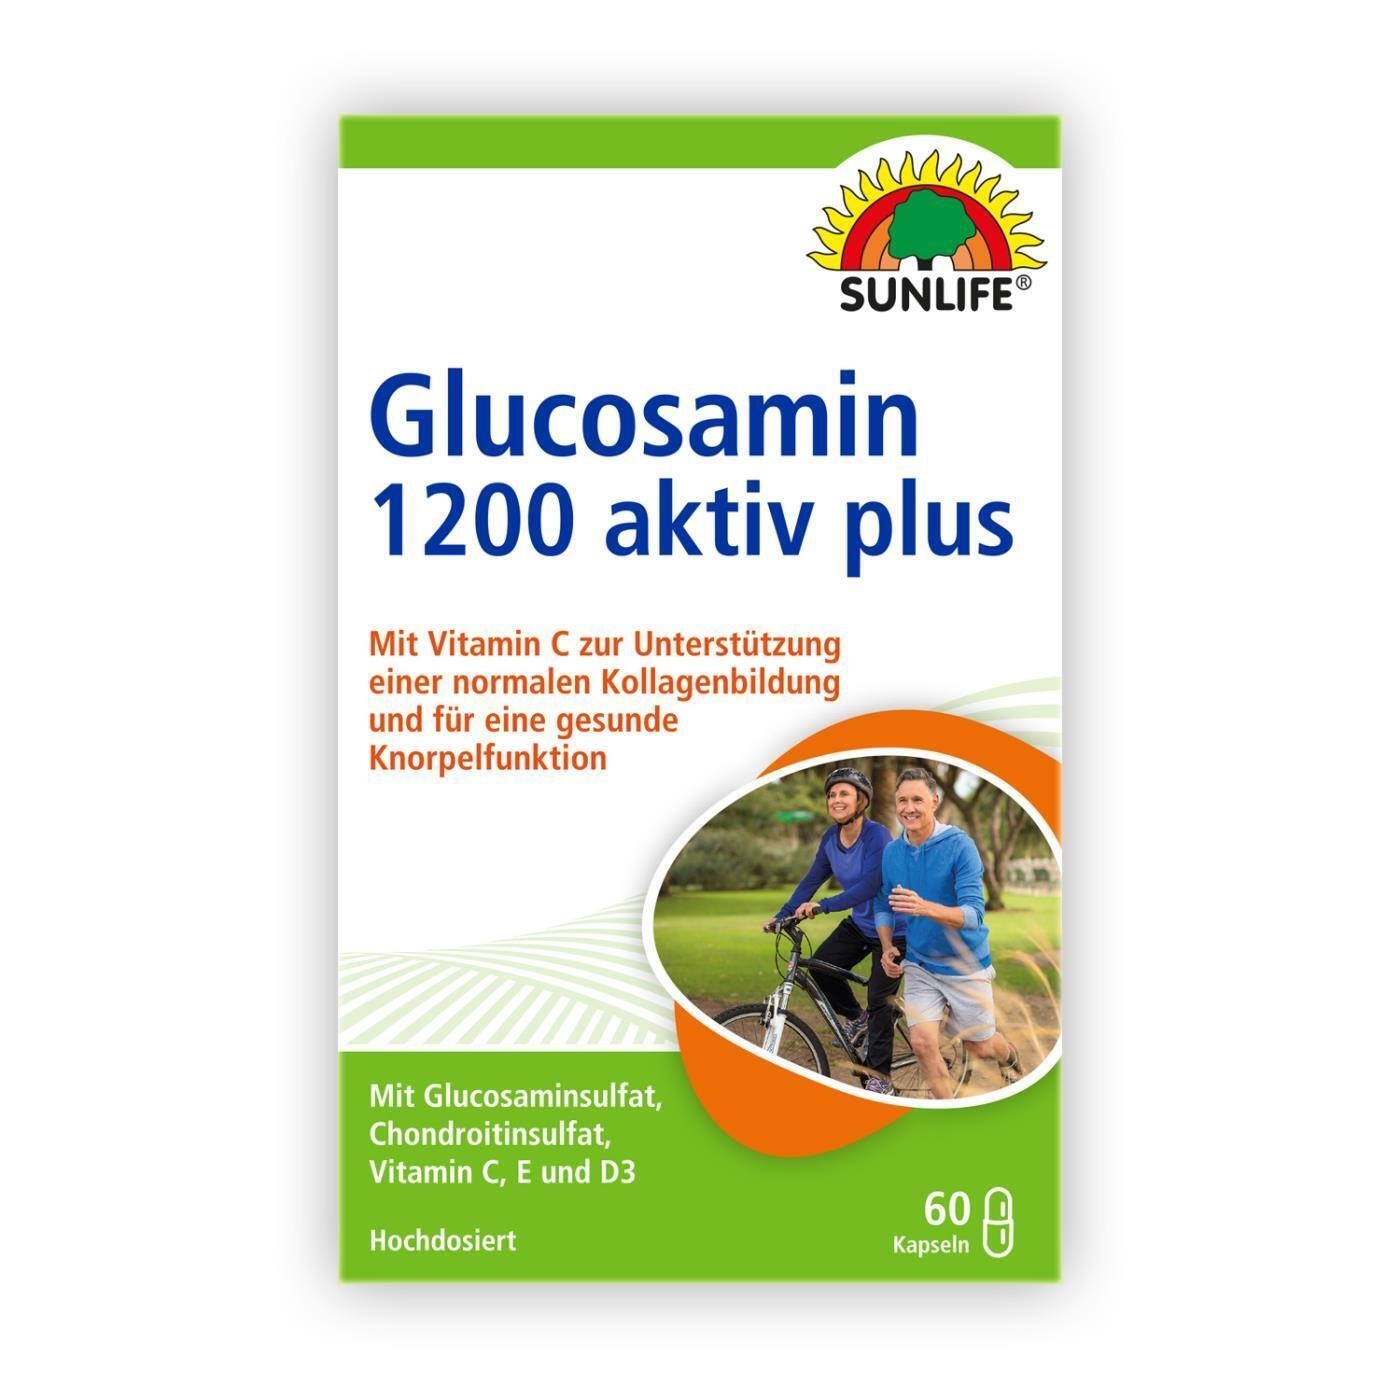 Sunlife Glucosamin 1200 aktiv plus unterstützt den Knorpel + Knochenaufbau 60 Stück